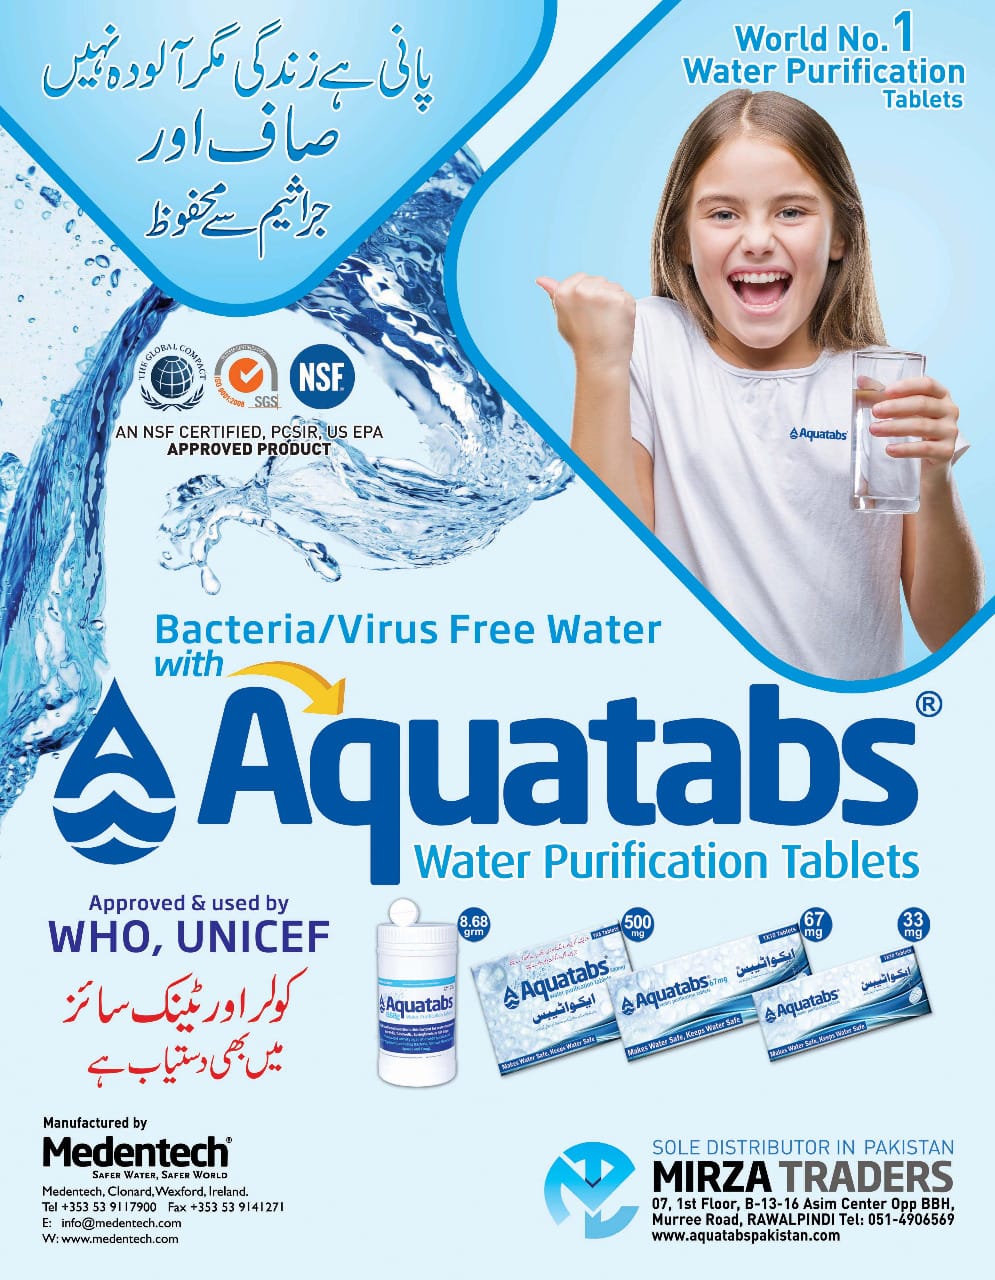 aquatabs tabs 8.68gm, 67mg. 500mg and 33mg -drinking water tablets